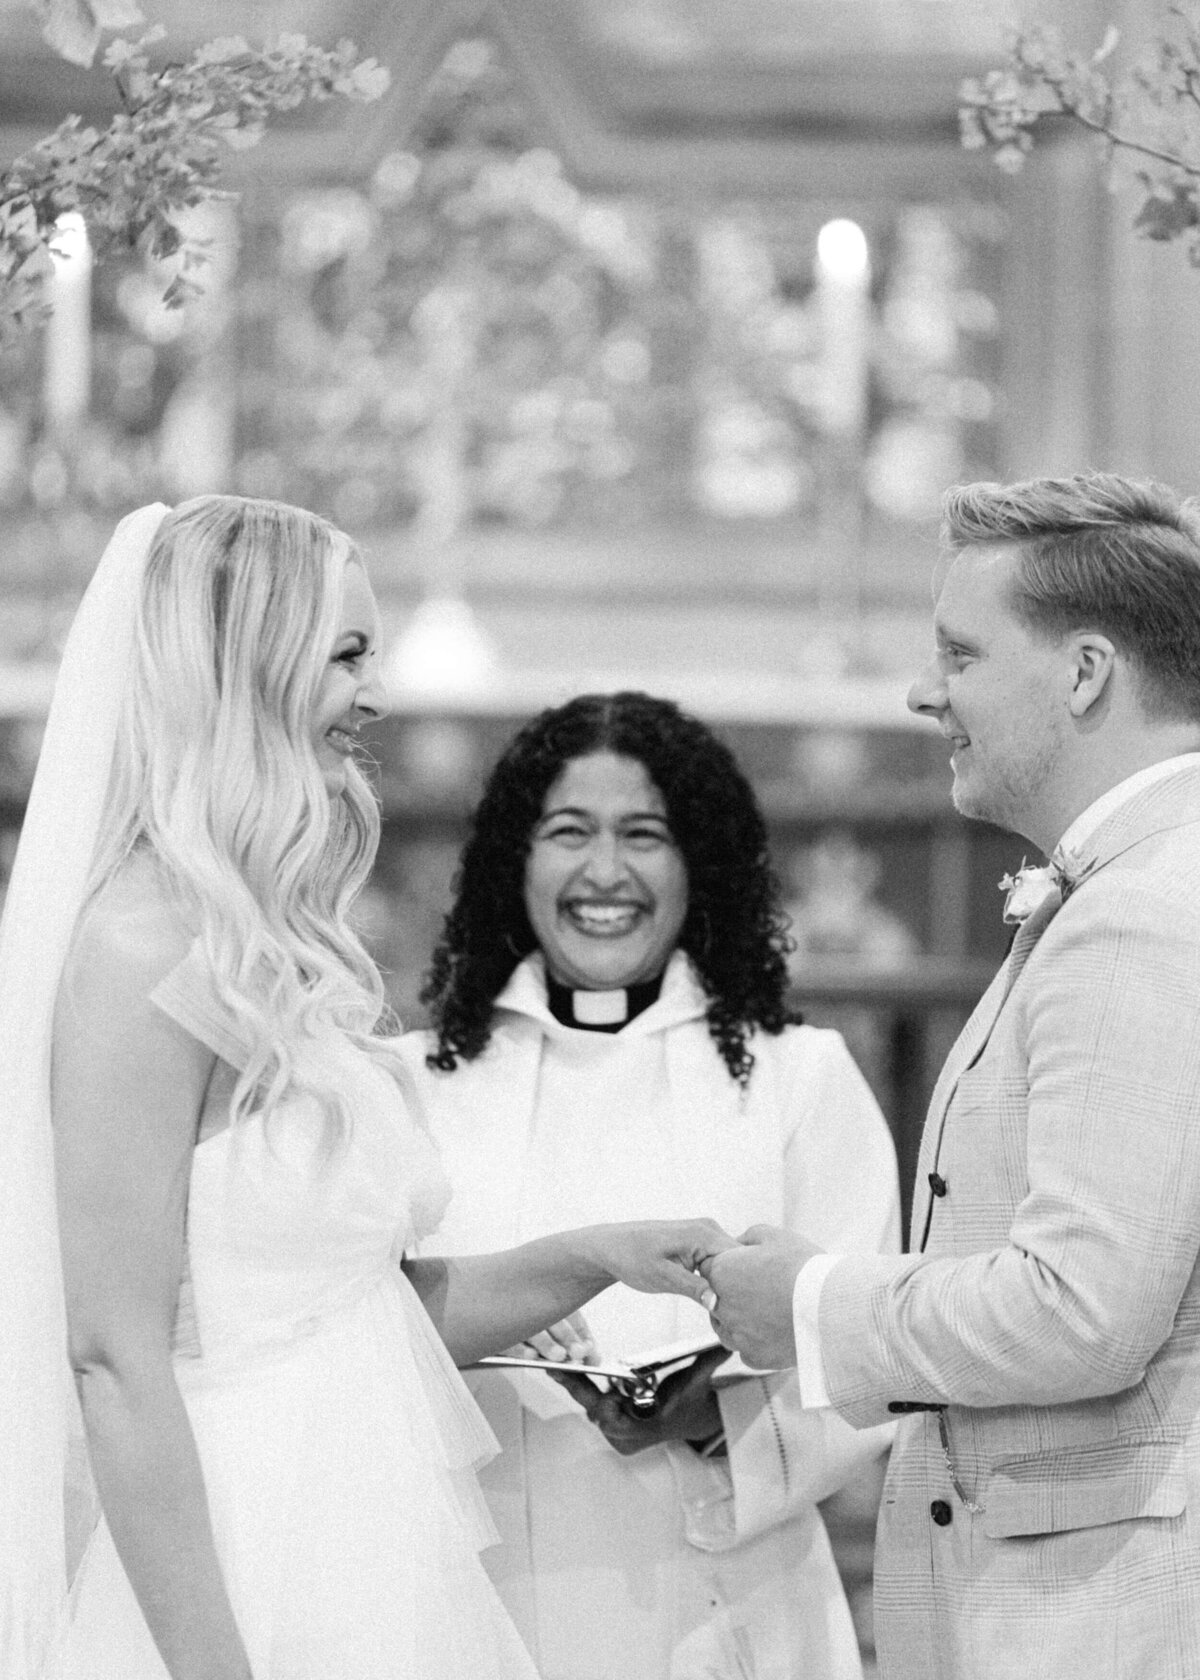 chloe-winstanley-weddings-church-ceremony-vows-rings-black-white